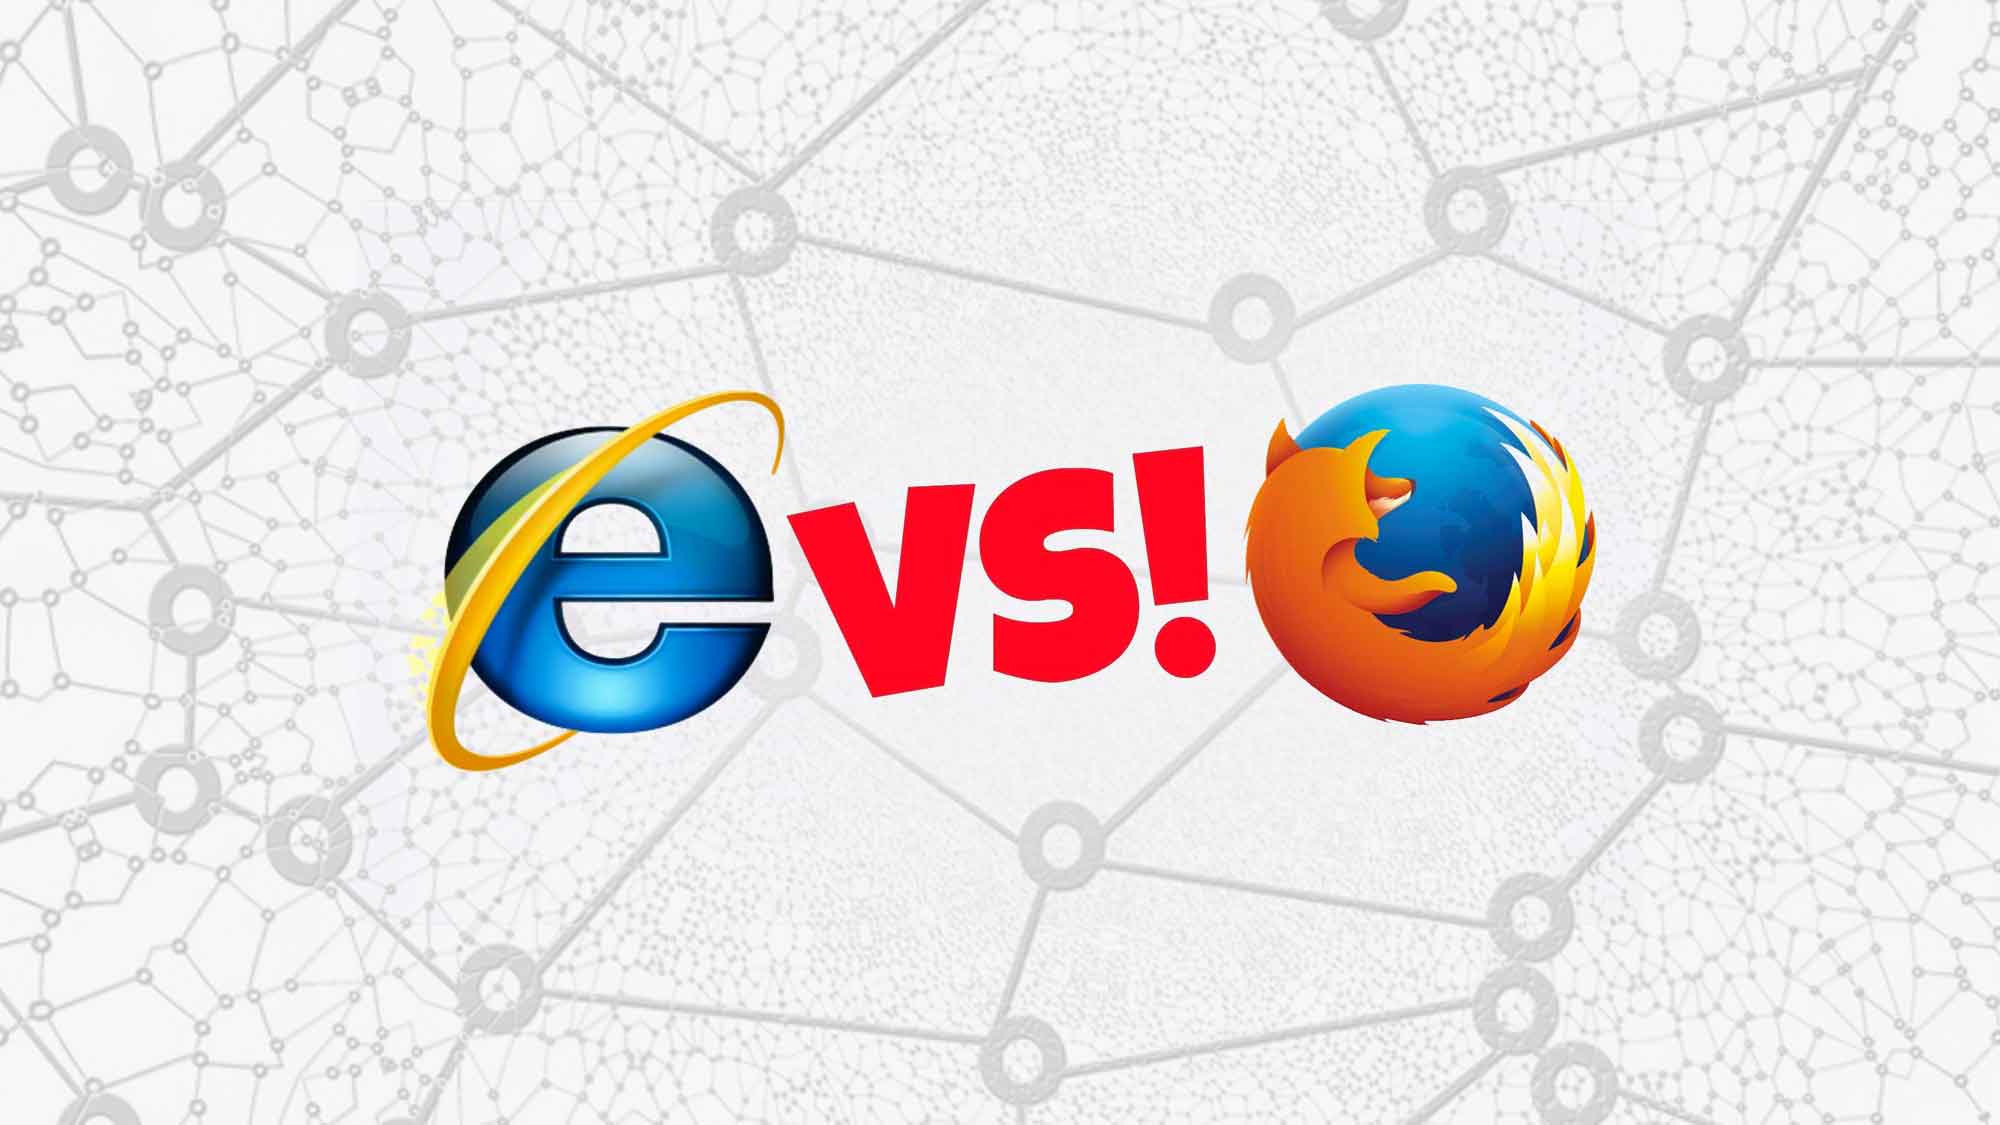 Microsoft Sends An Internet Explorer Cake To The Firefox 3 Dev Team (2008)